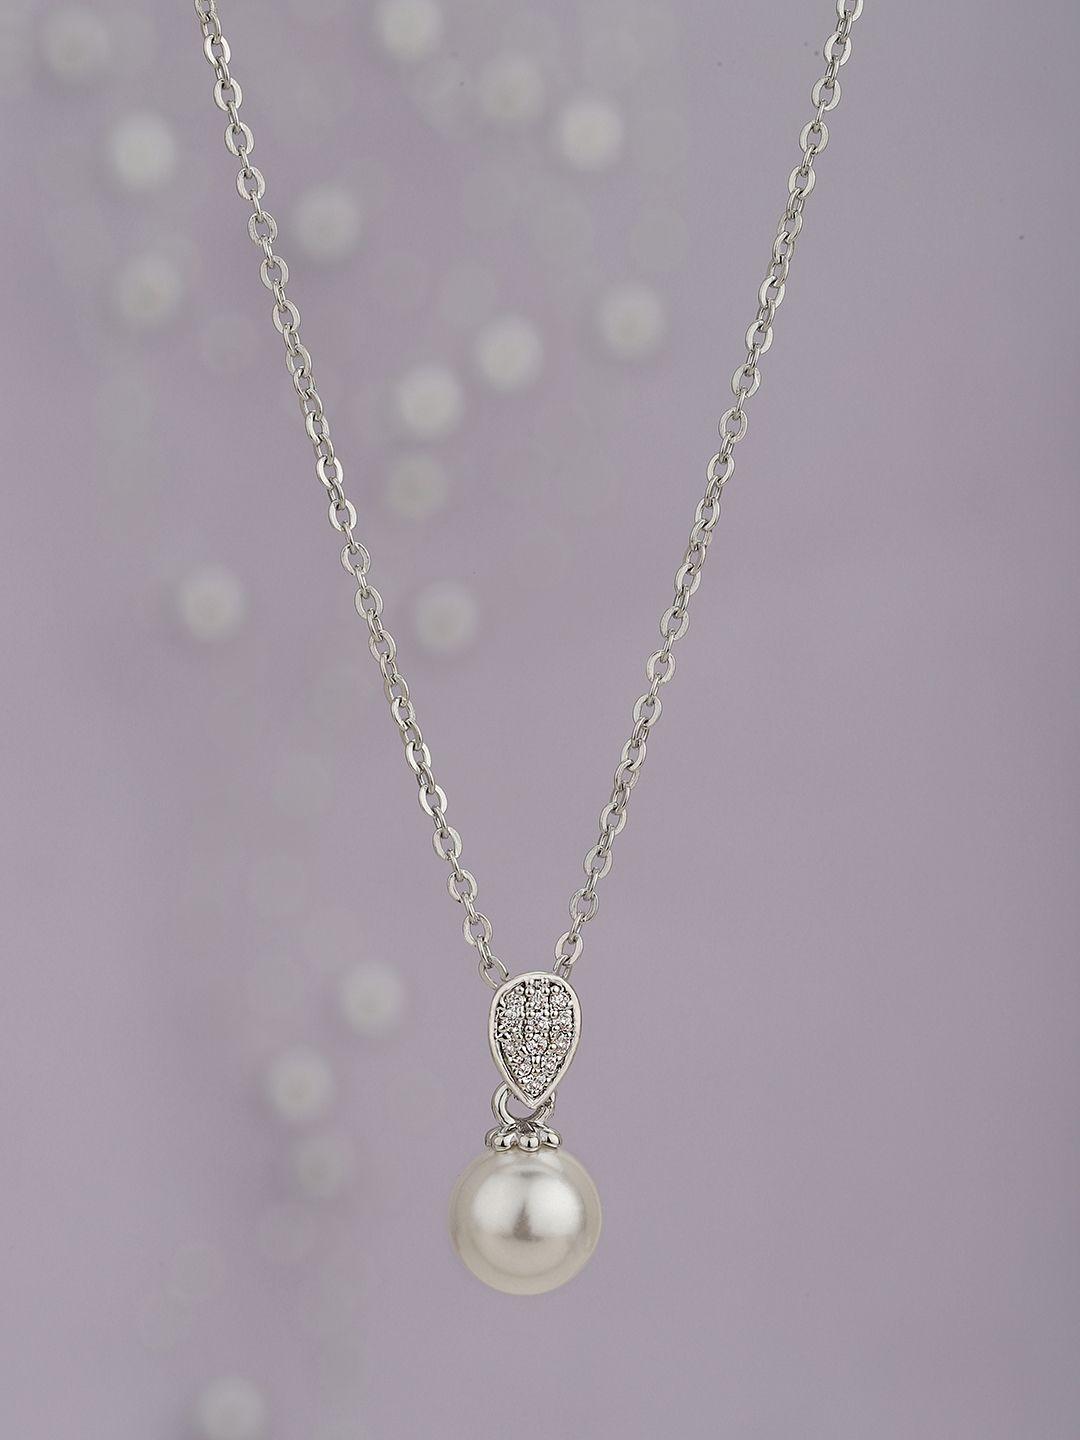 carlton-london-rhodium-plated-pearls-pendant-with-chain